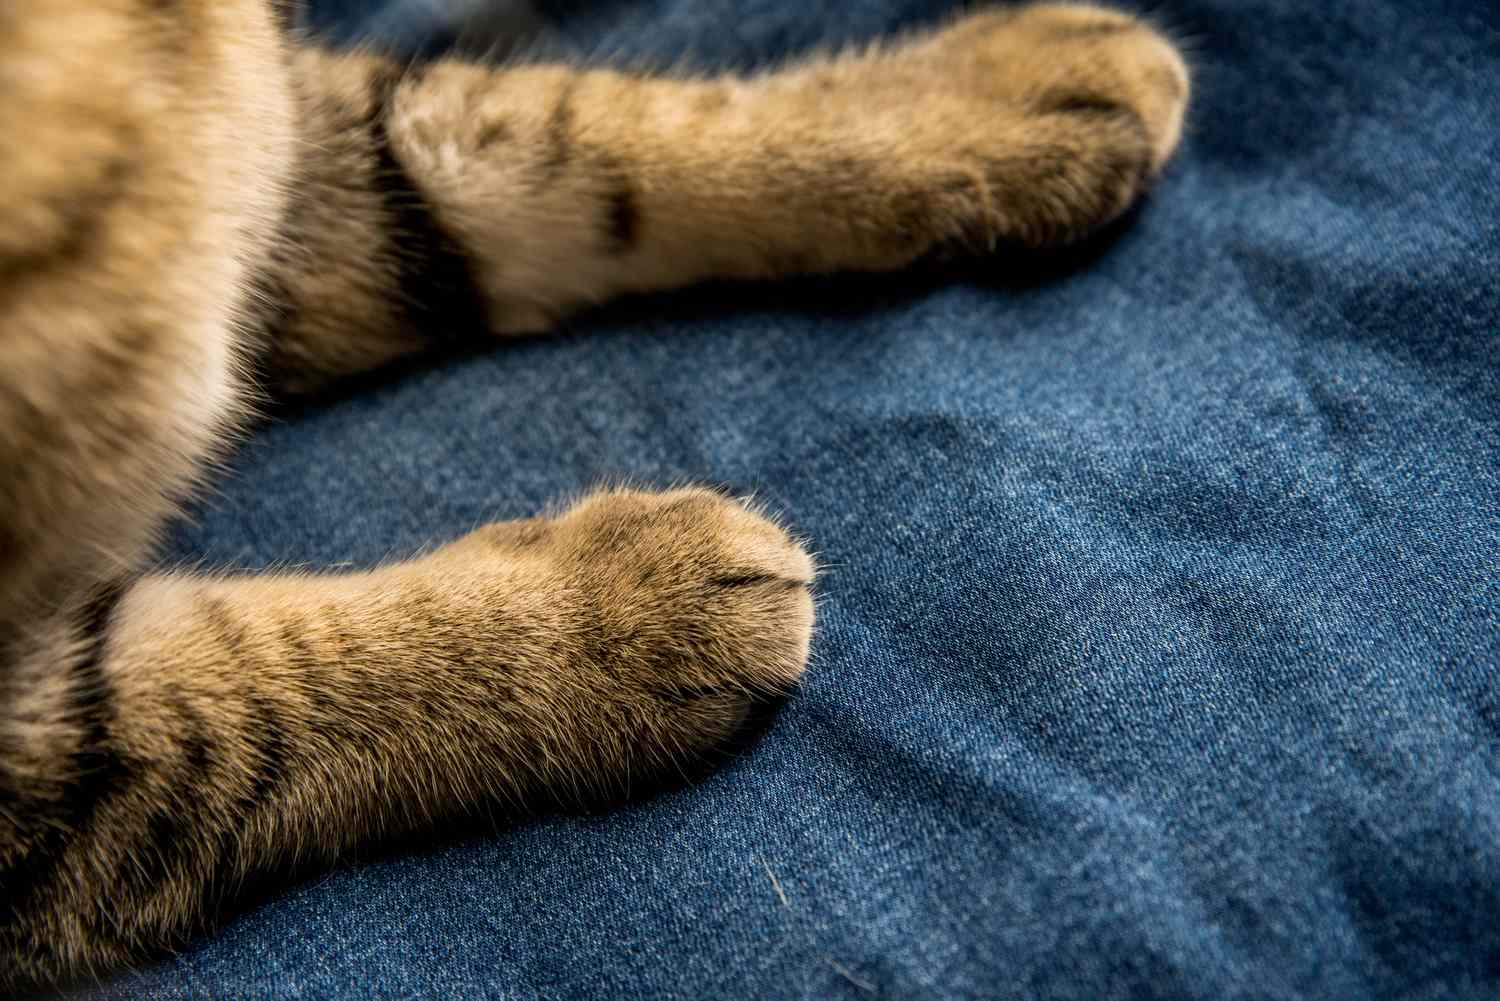 kitty's paws on denim fabric